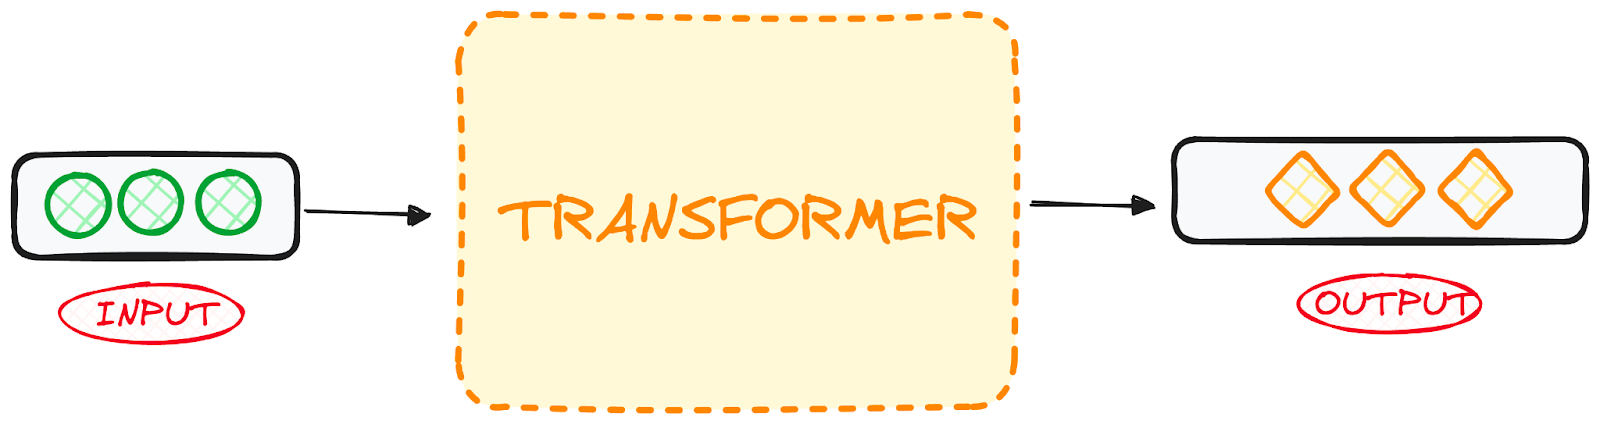 The transformer architecture as a black box.